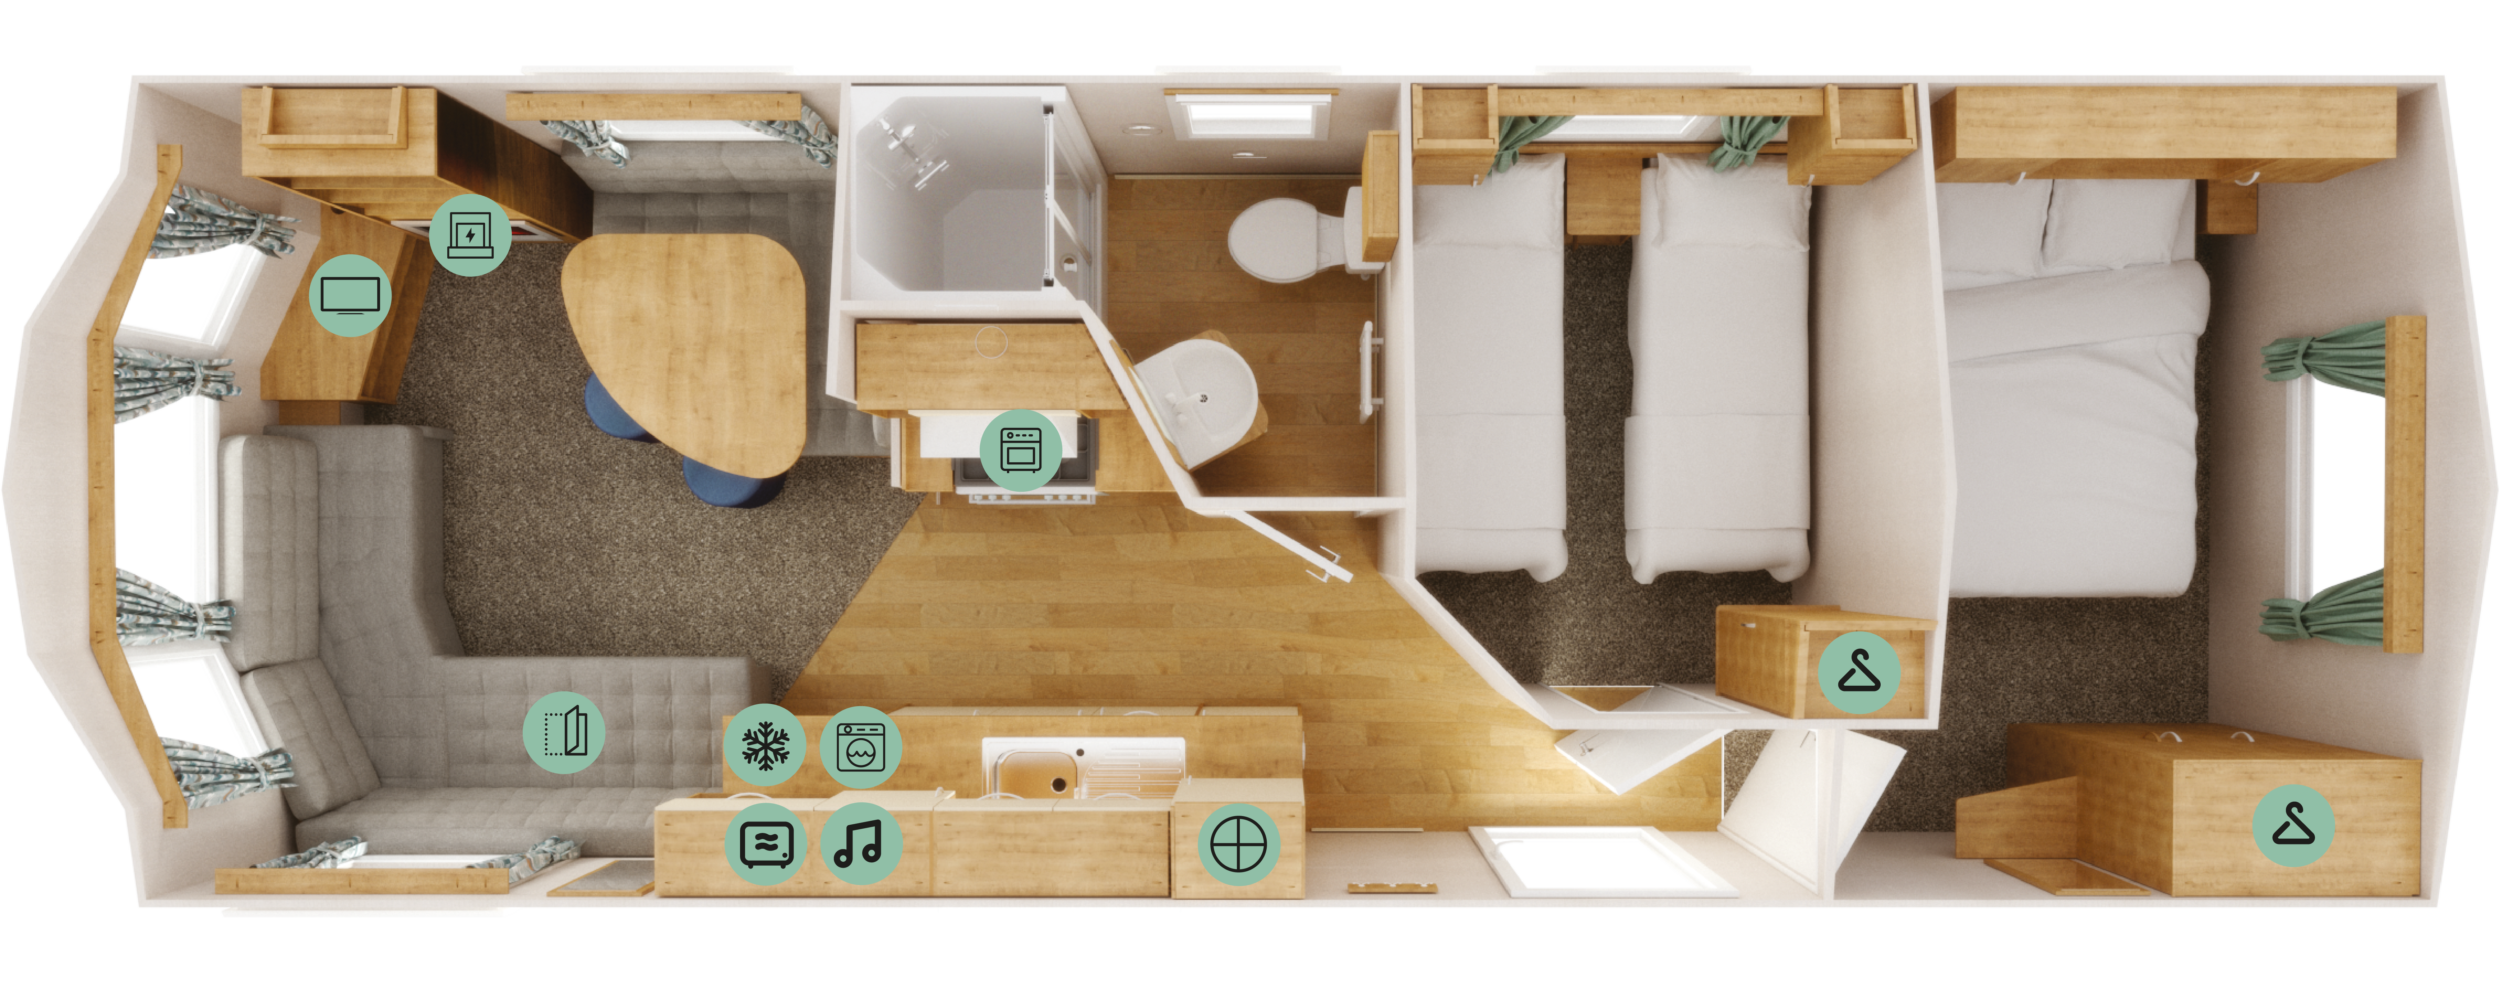 New Willerby Ashurst floor plan layout static caravan mobile home 28 x 10 2 bedroom